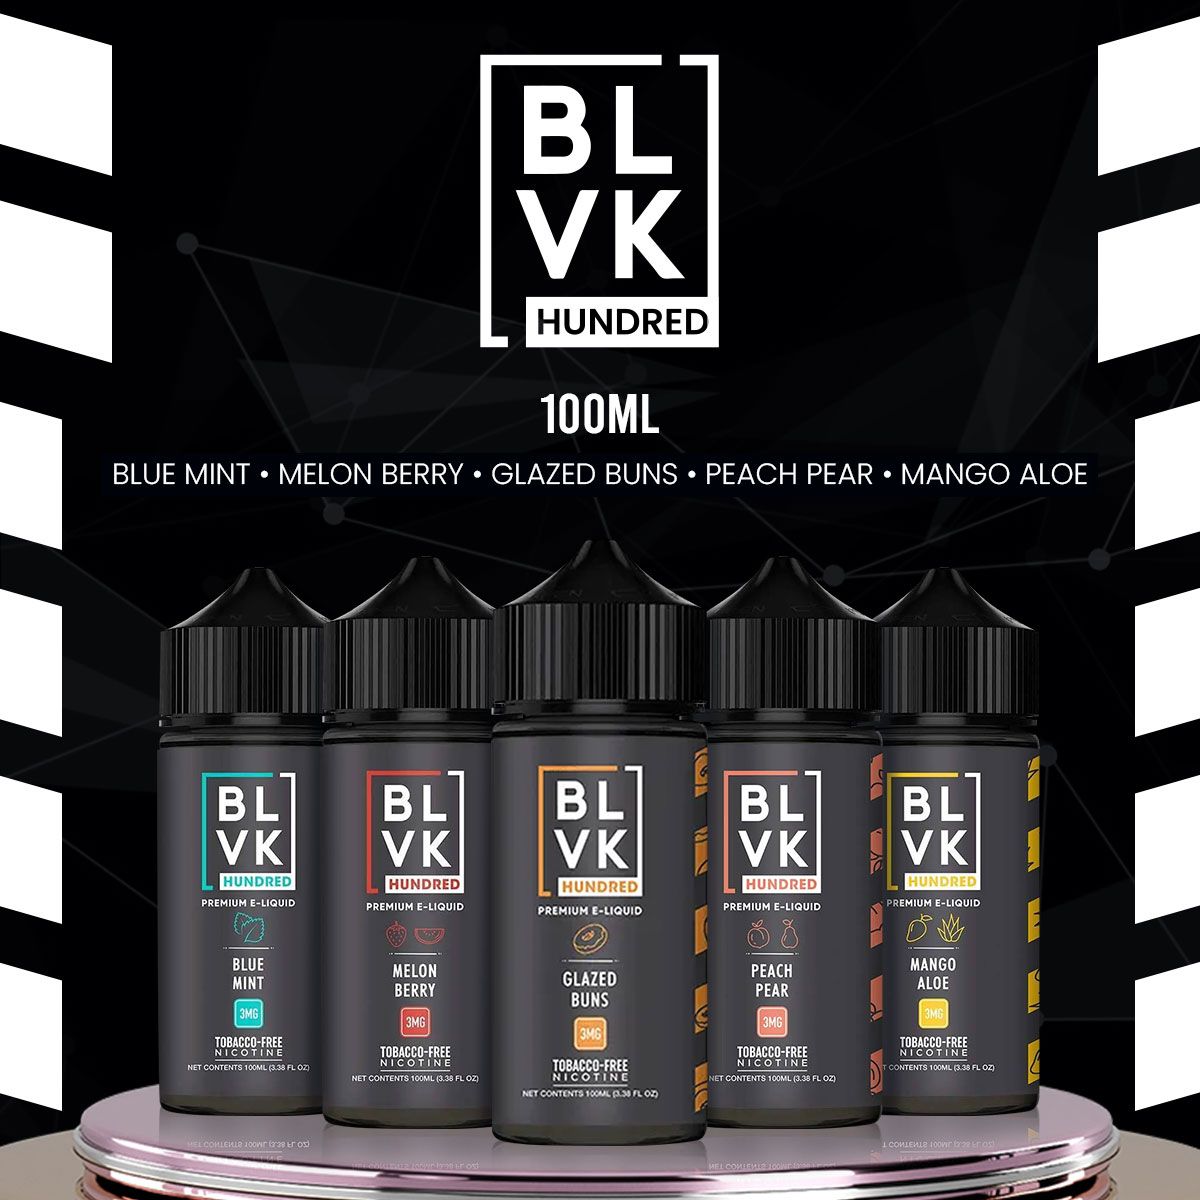 BLVK New Flavors